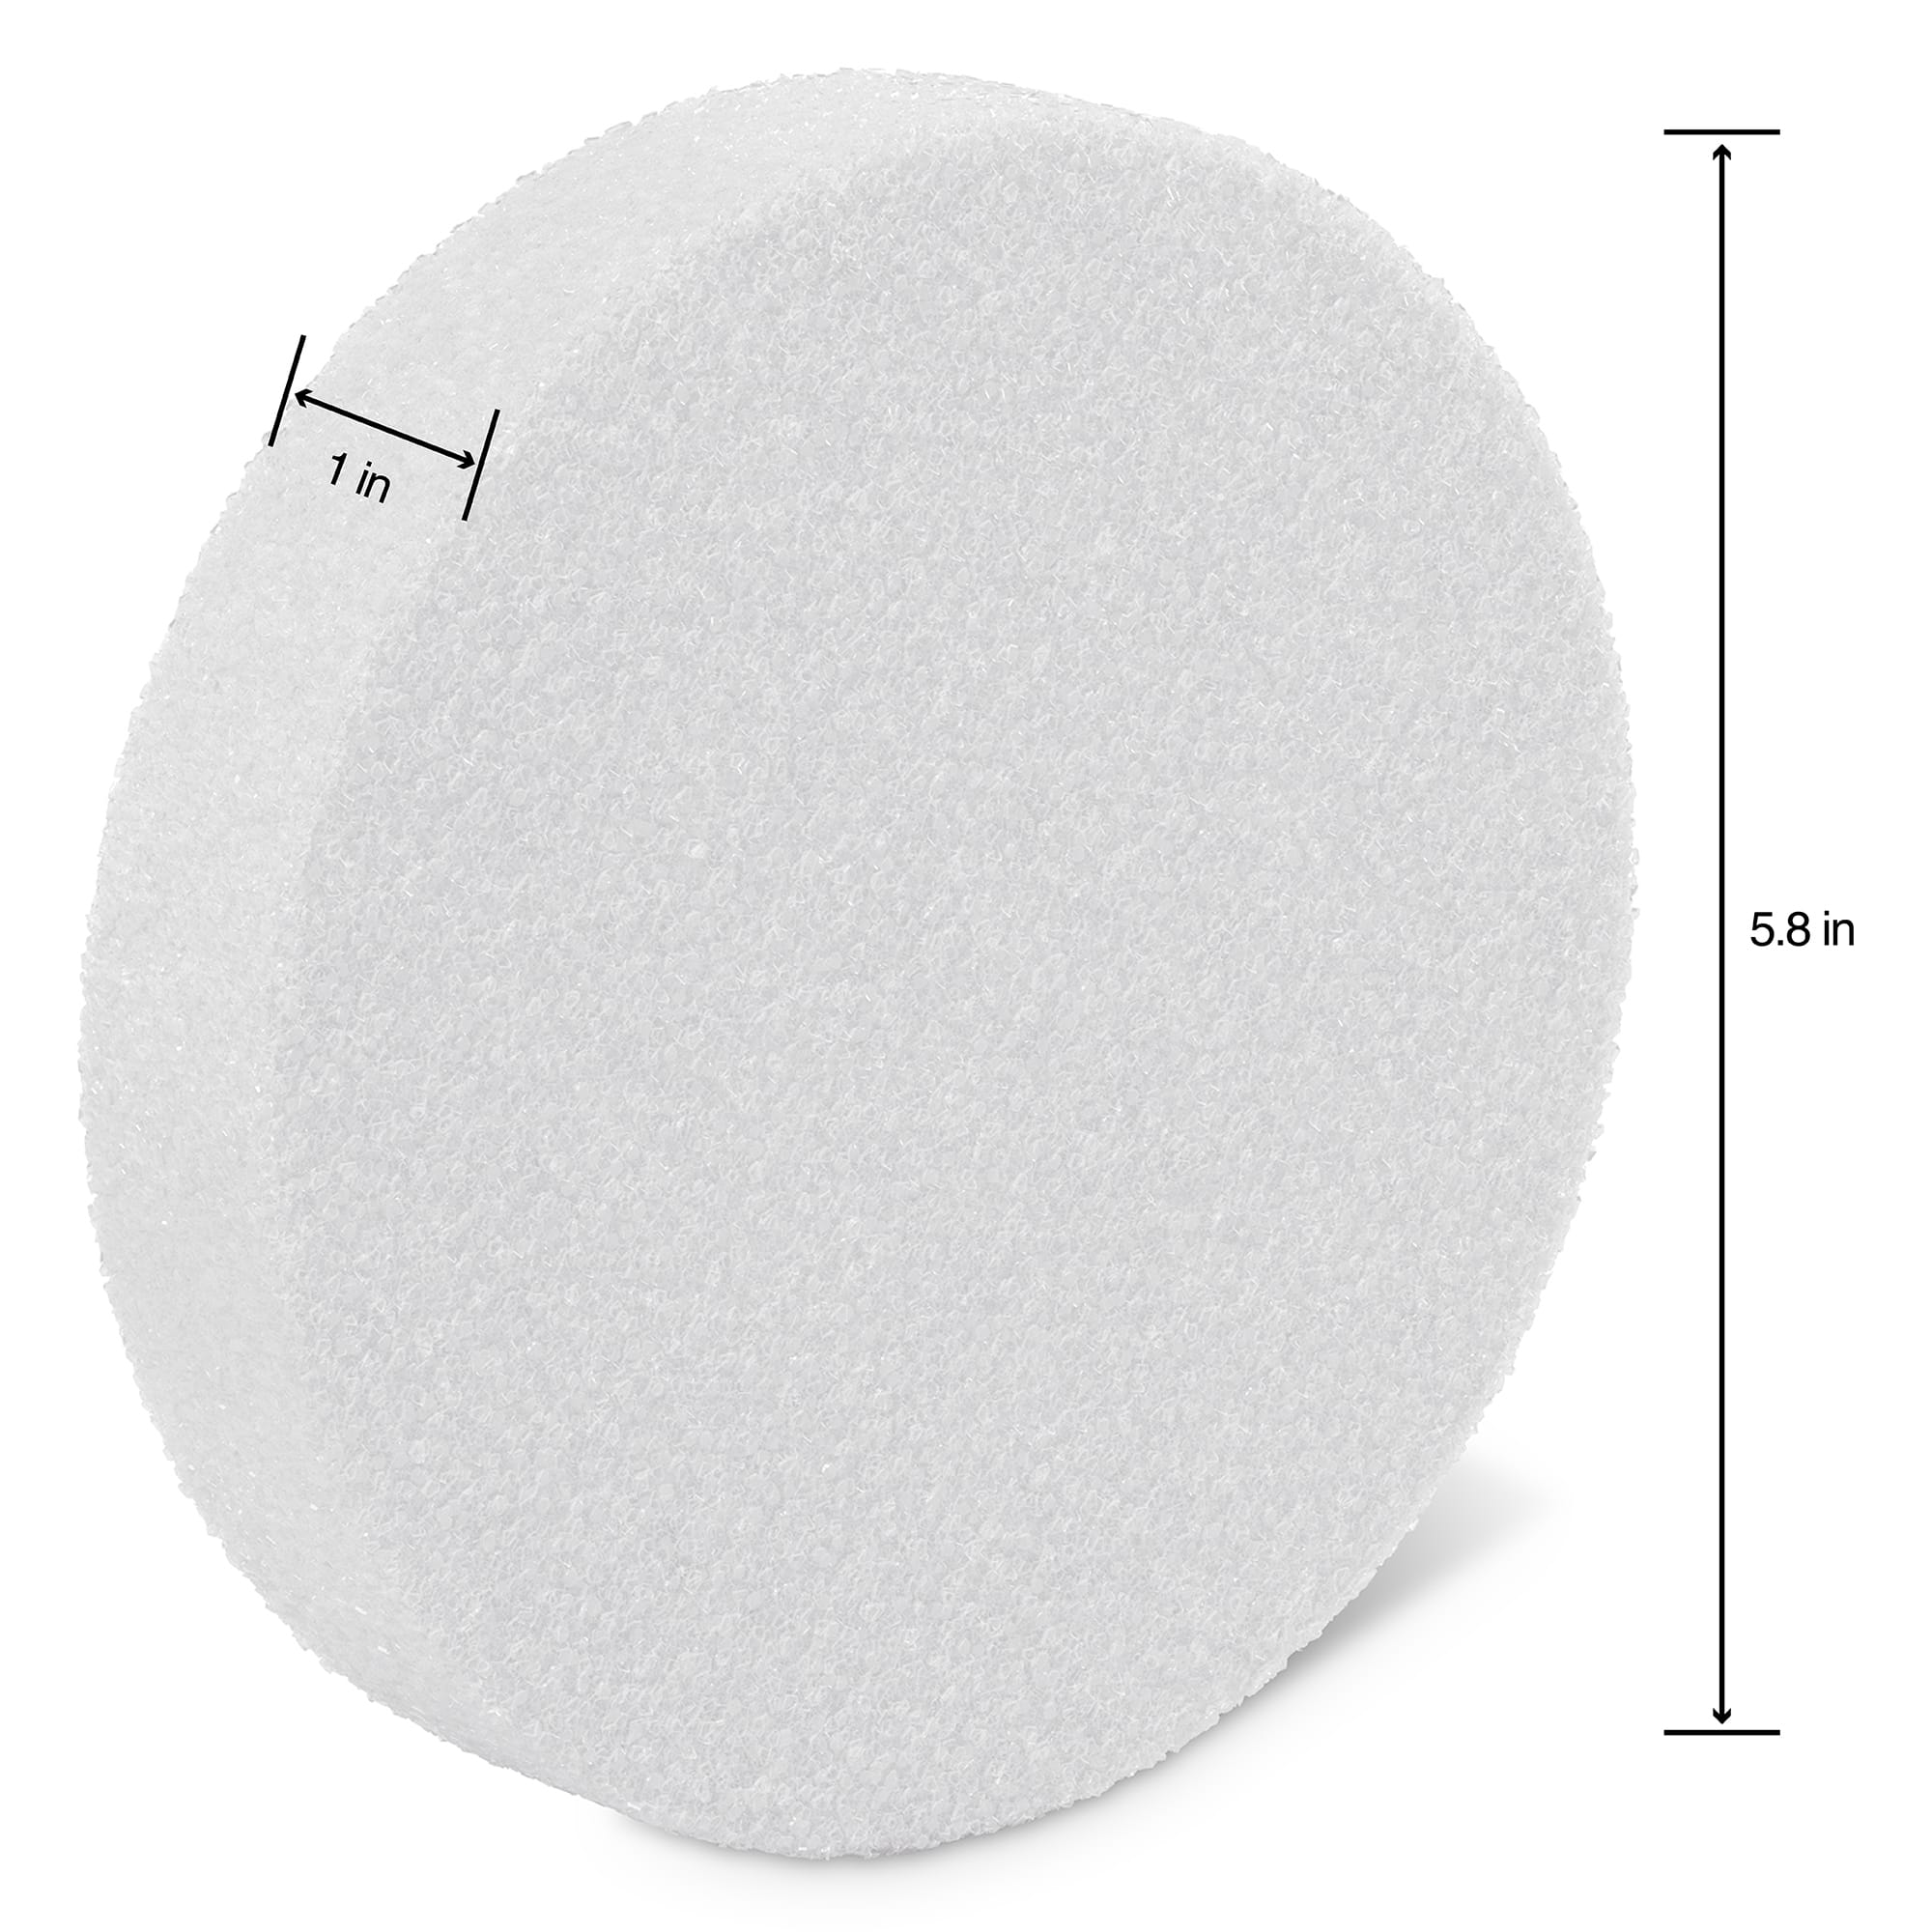 Best Deal for LA Crafts 12 Piece White Round Styrofoam Craft Discs for